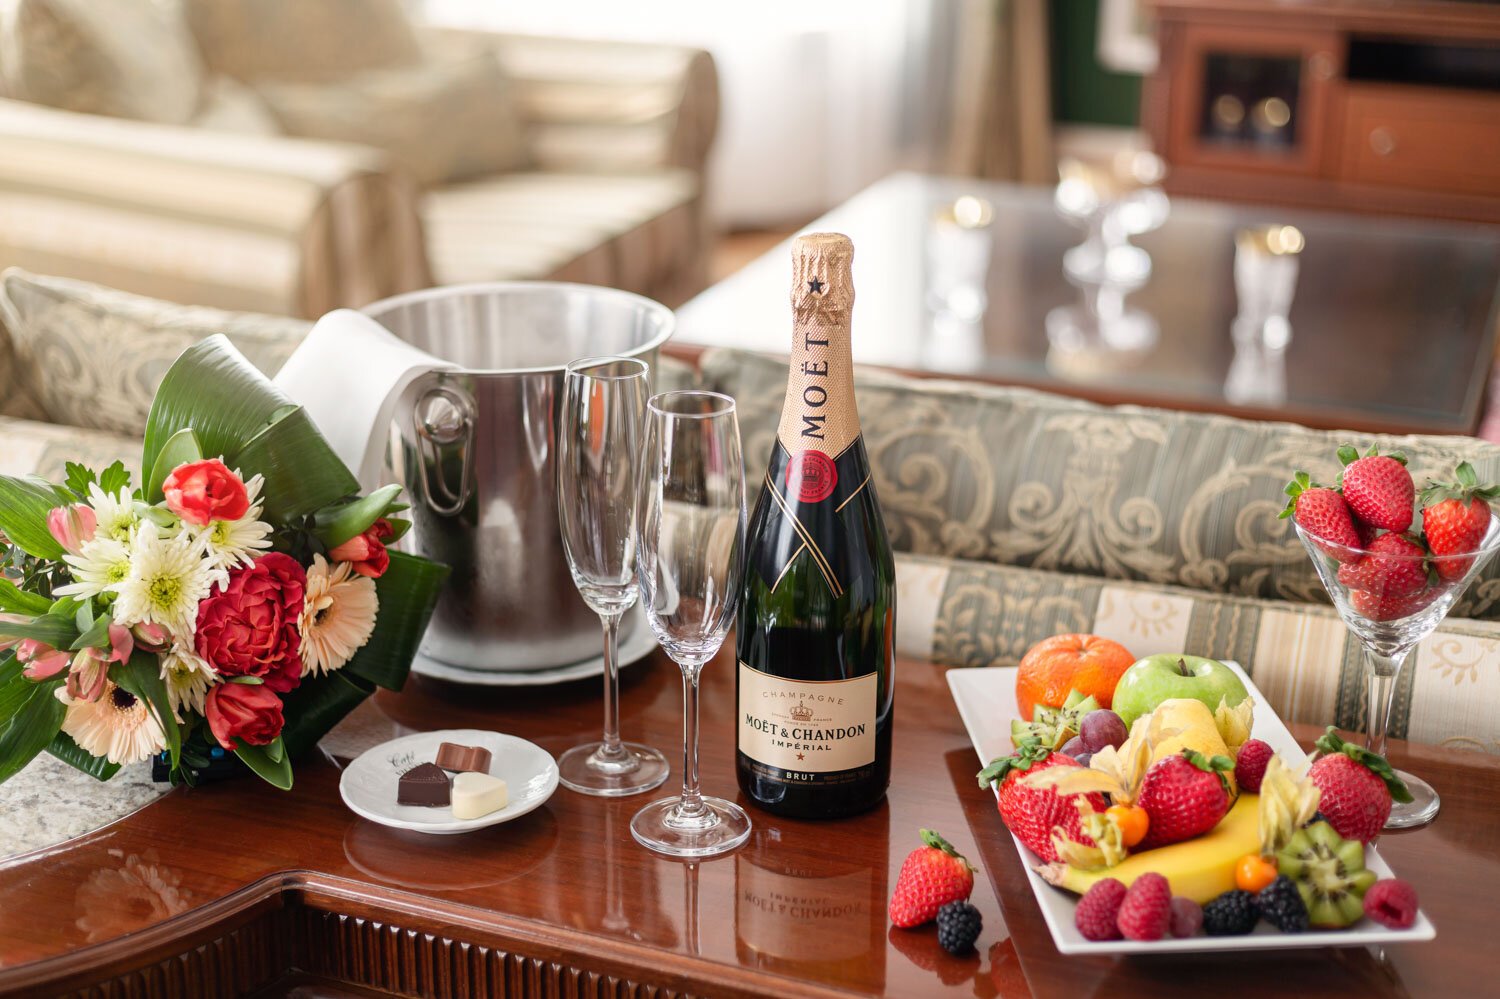 Food photography for spa hotel imperial karlovy vary - Champagne_JiriLizler_Hospitality Photographer.JPG